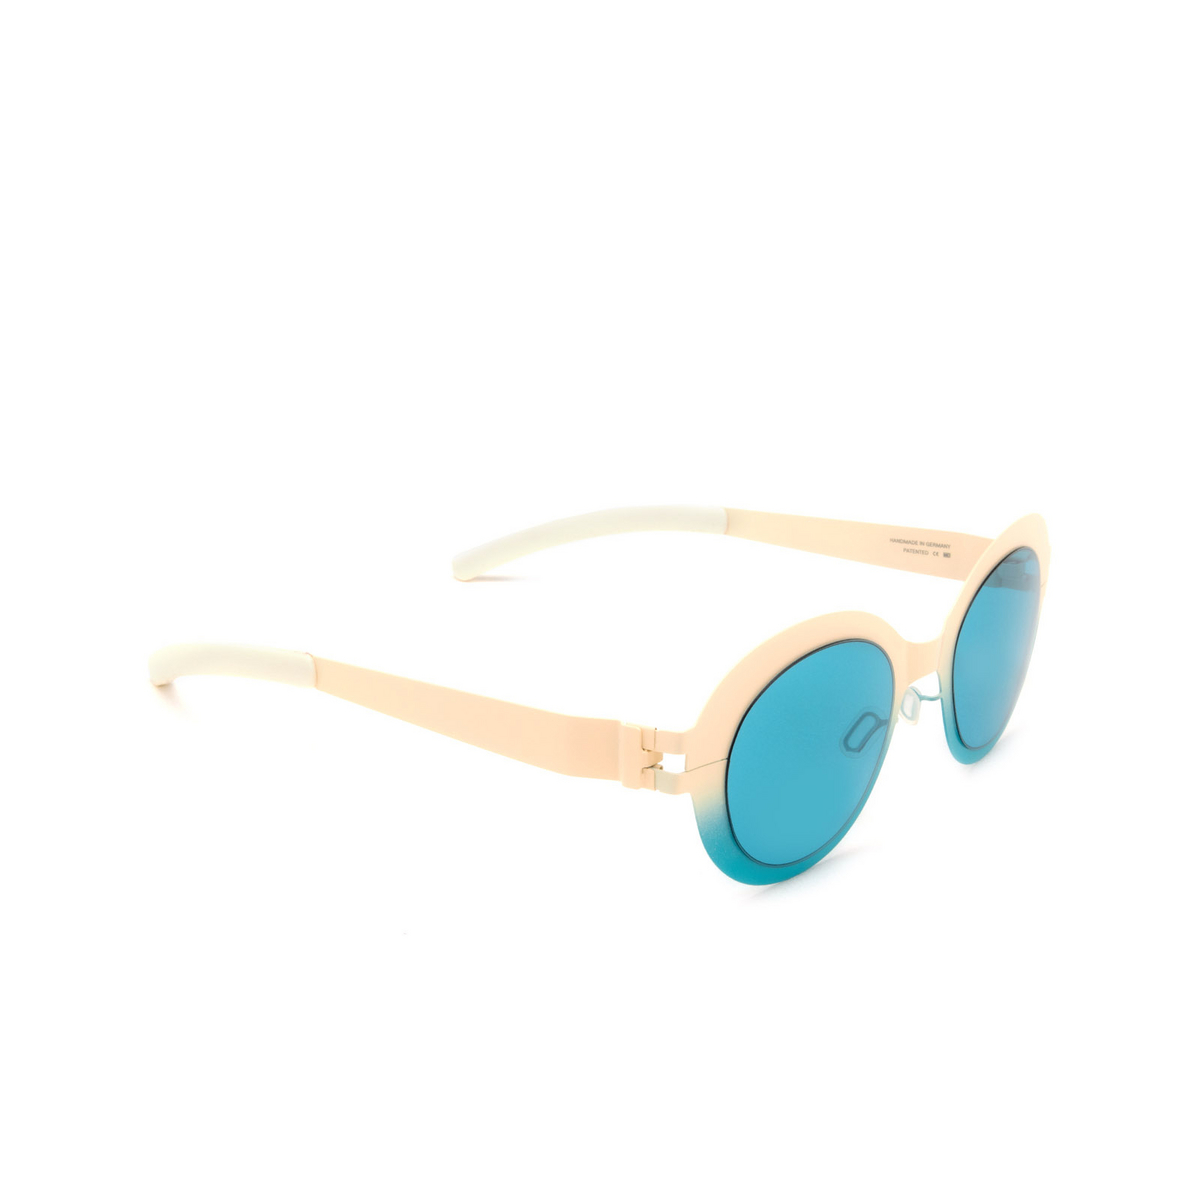 Mykita FOCUS Sunglasses 562 Chantilly White/Turquoise - three-quarters view